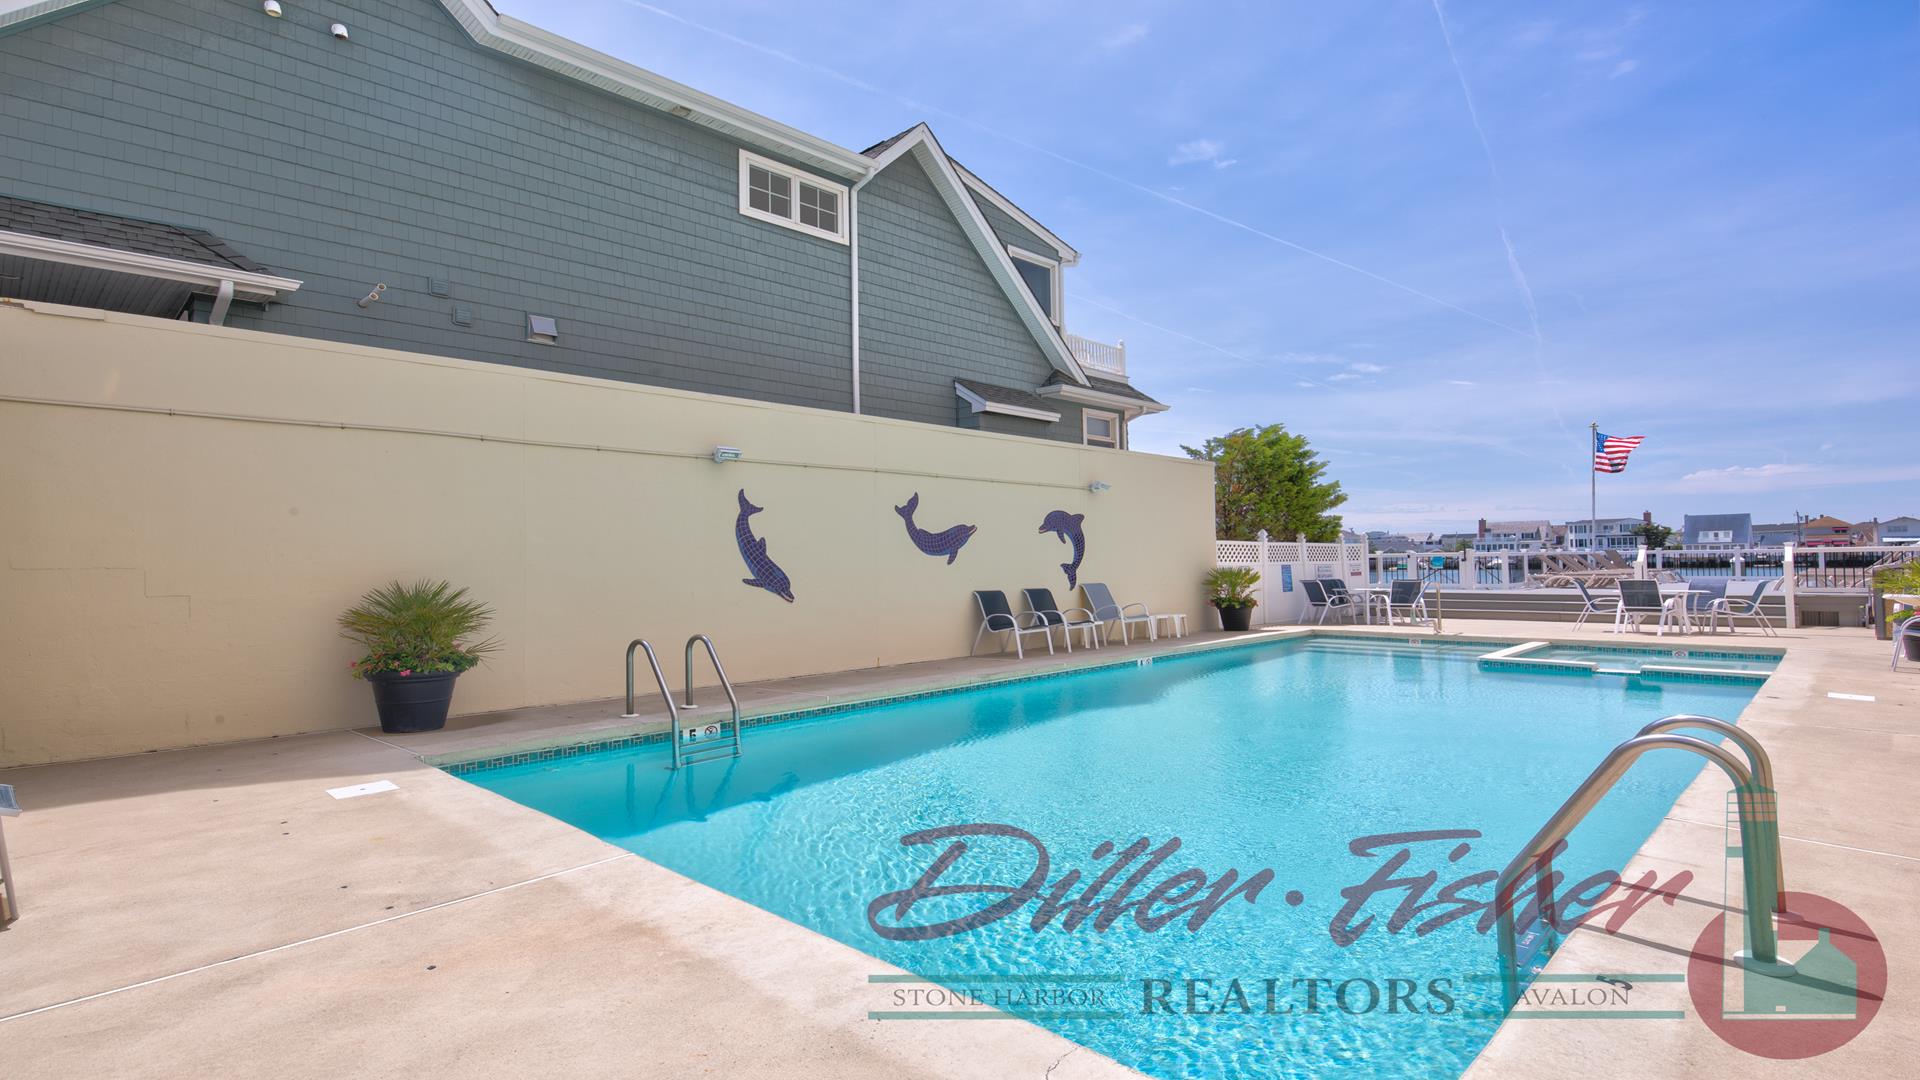 Harbor Vacation | 351 | Rentals Realtors Stone 96th Street, Fisher Diller